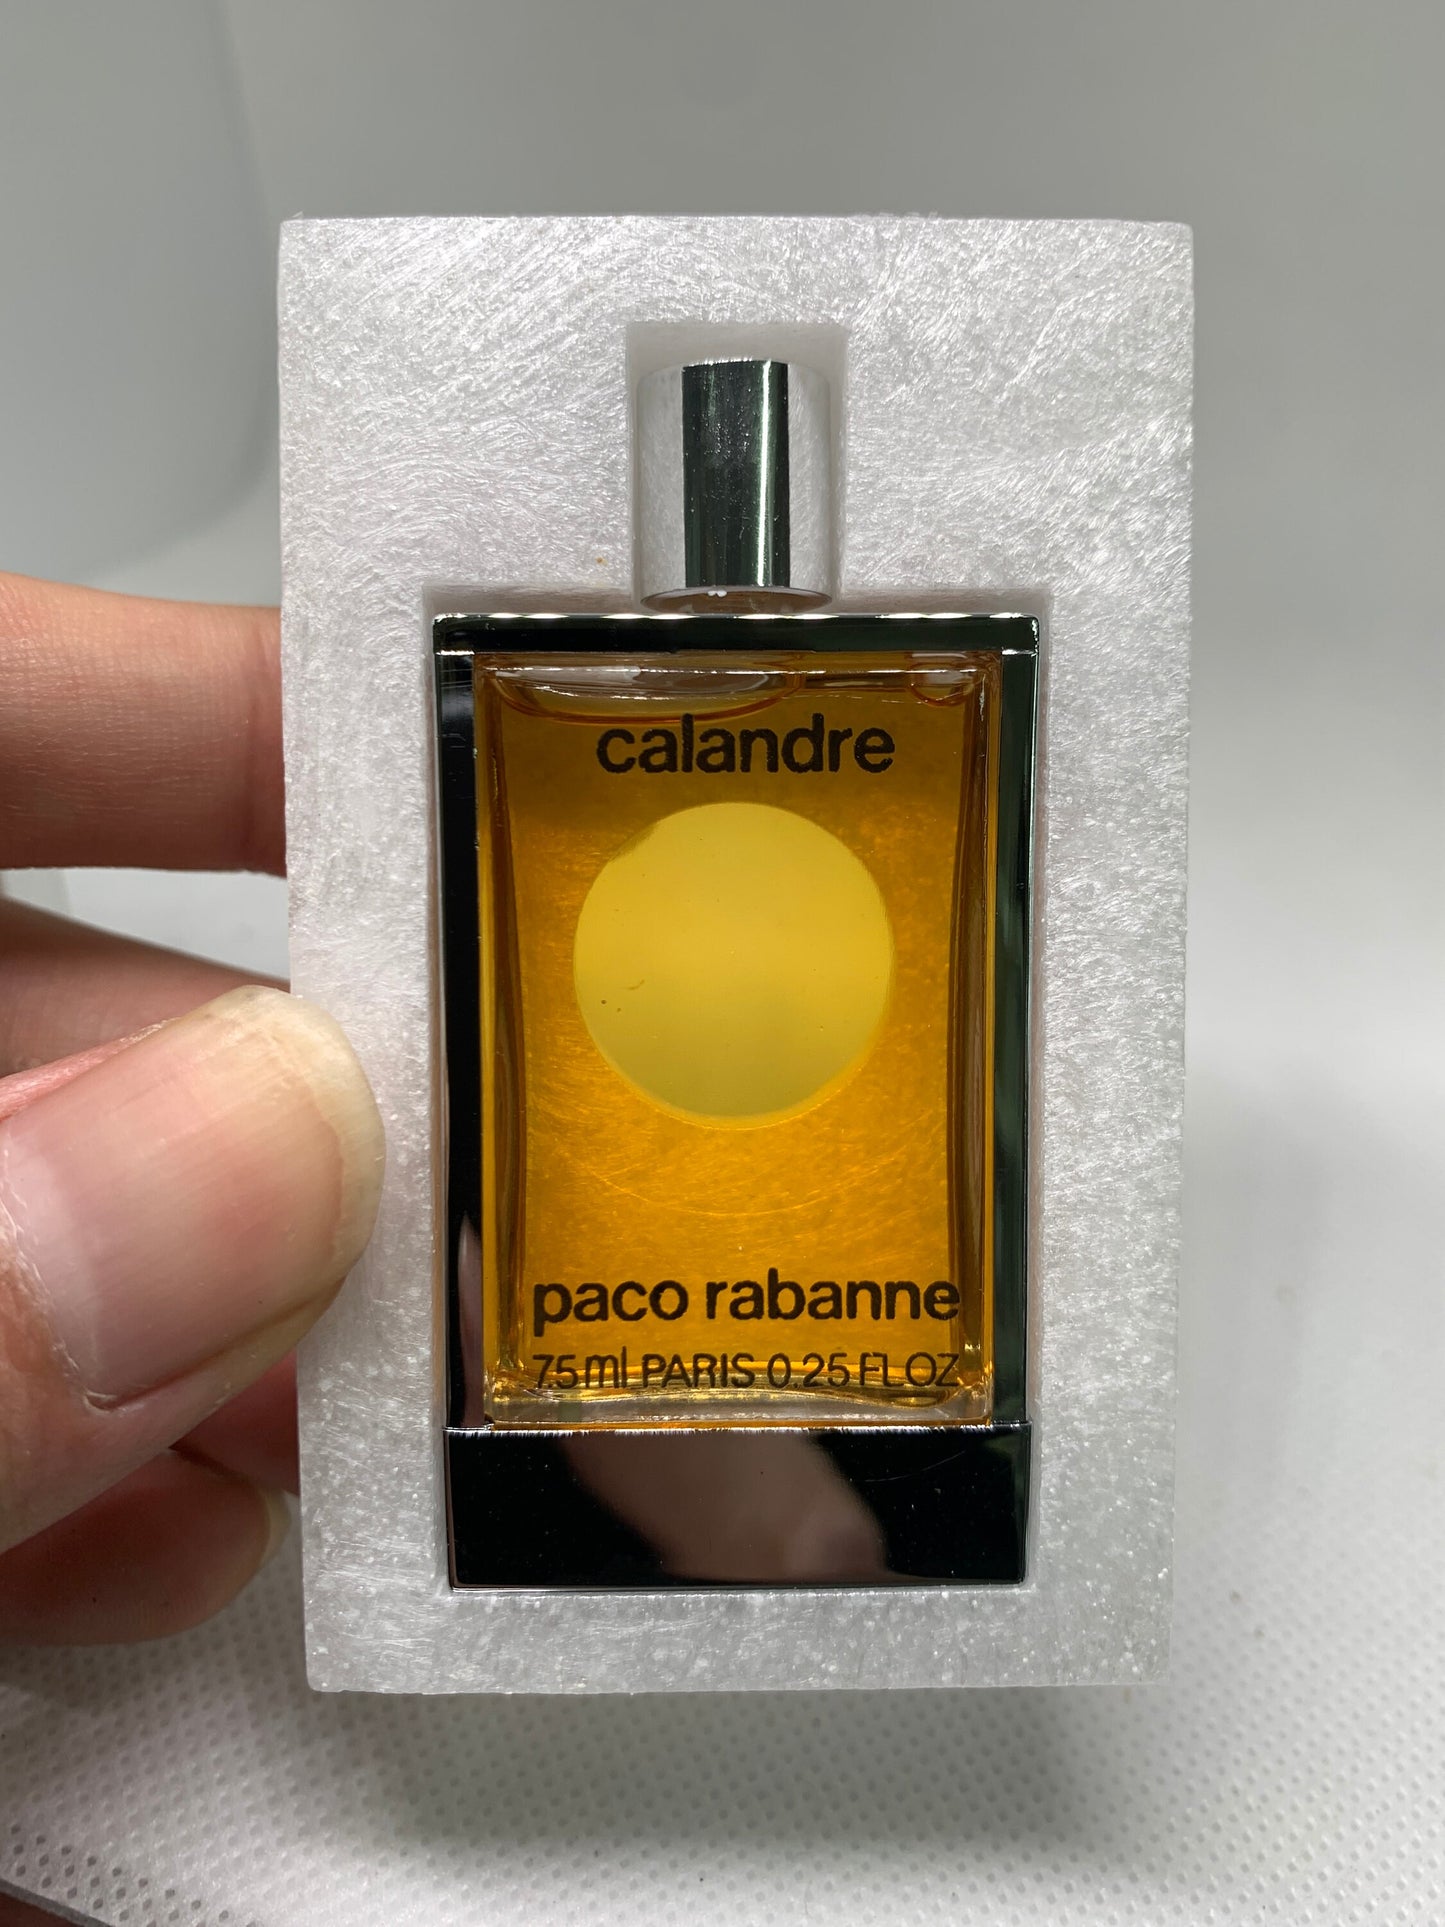 Paco Rabanne Calandre 7.5ml 1/4 oz Parfum Perfume - 30MAR22